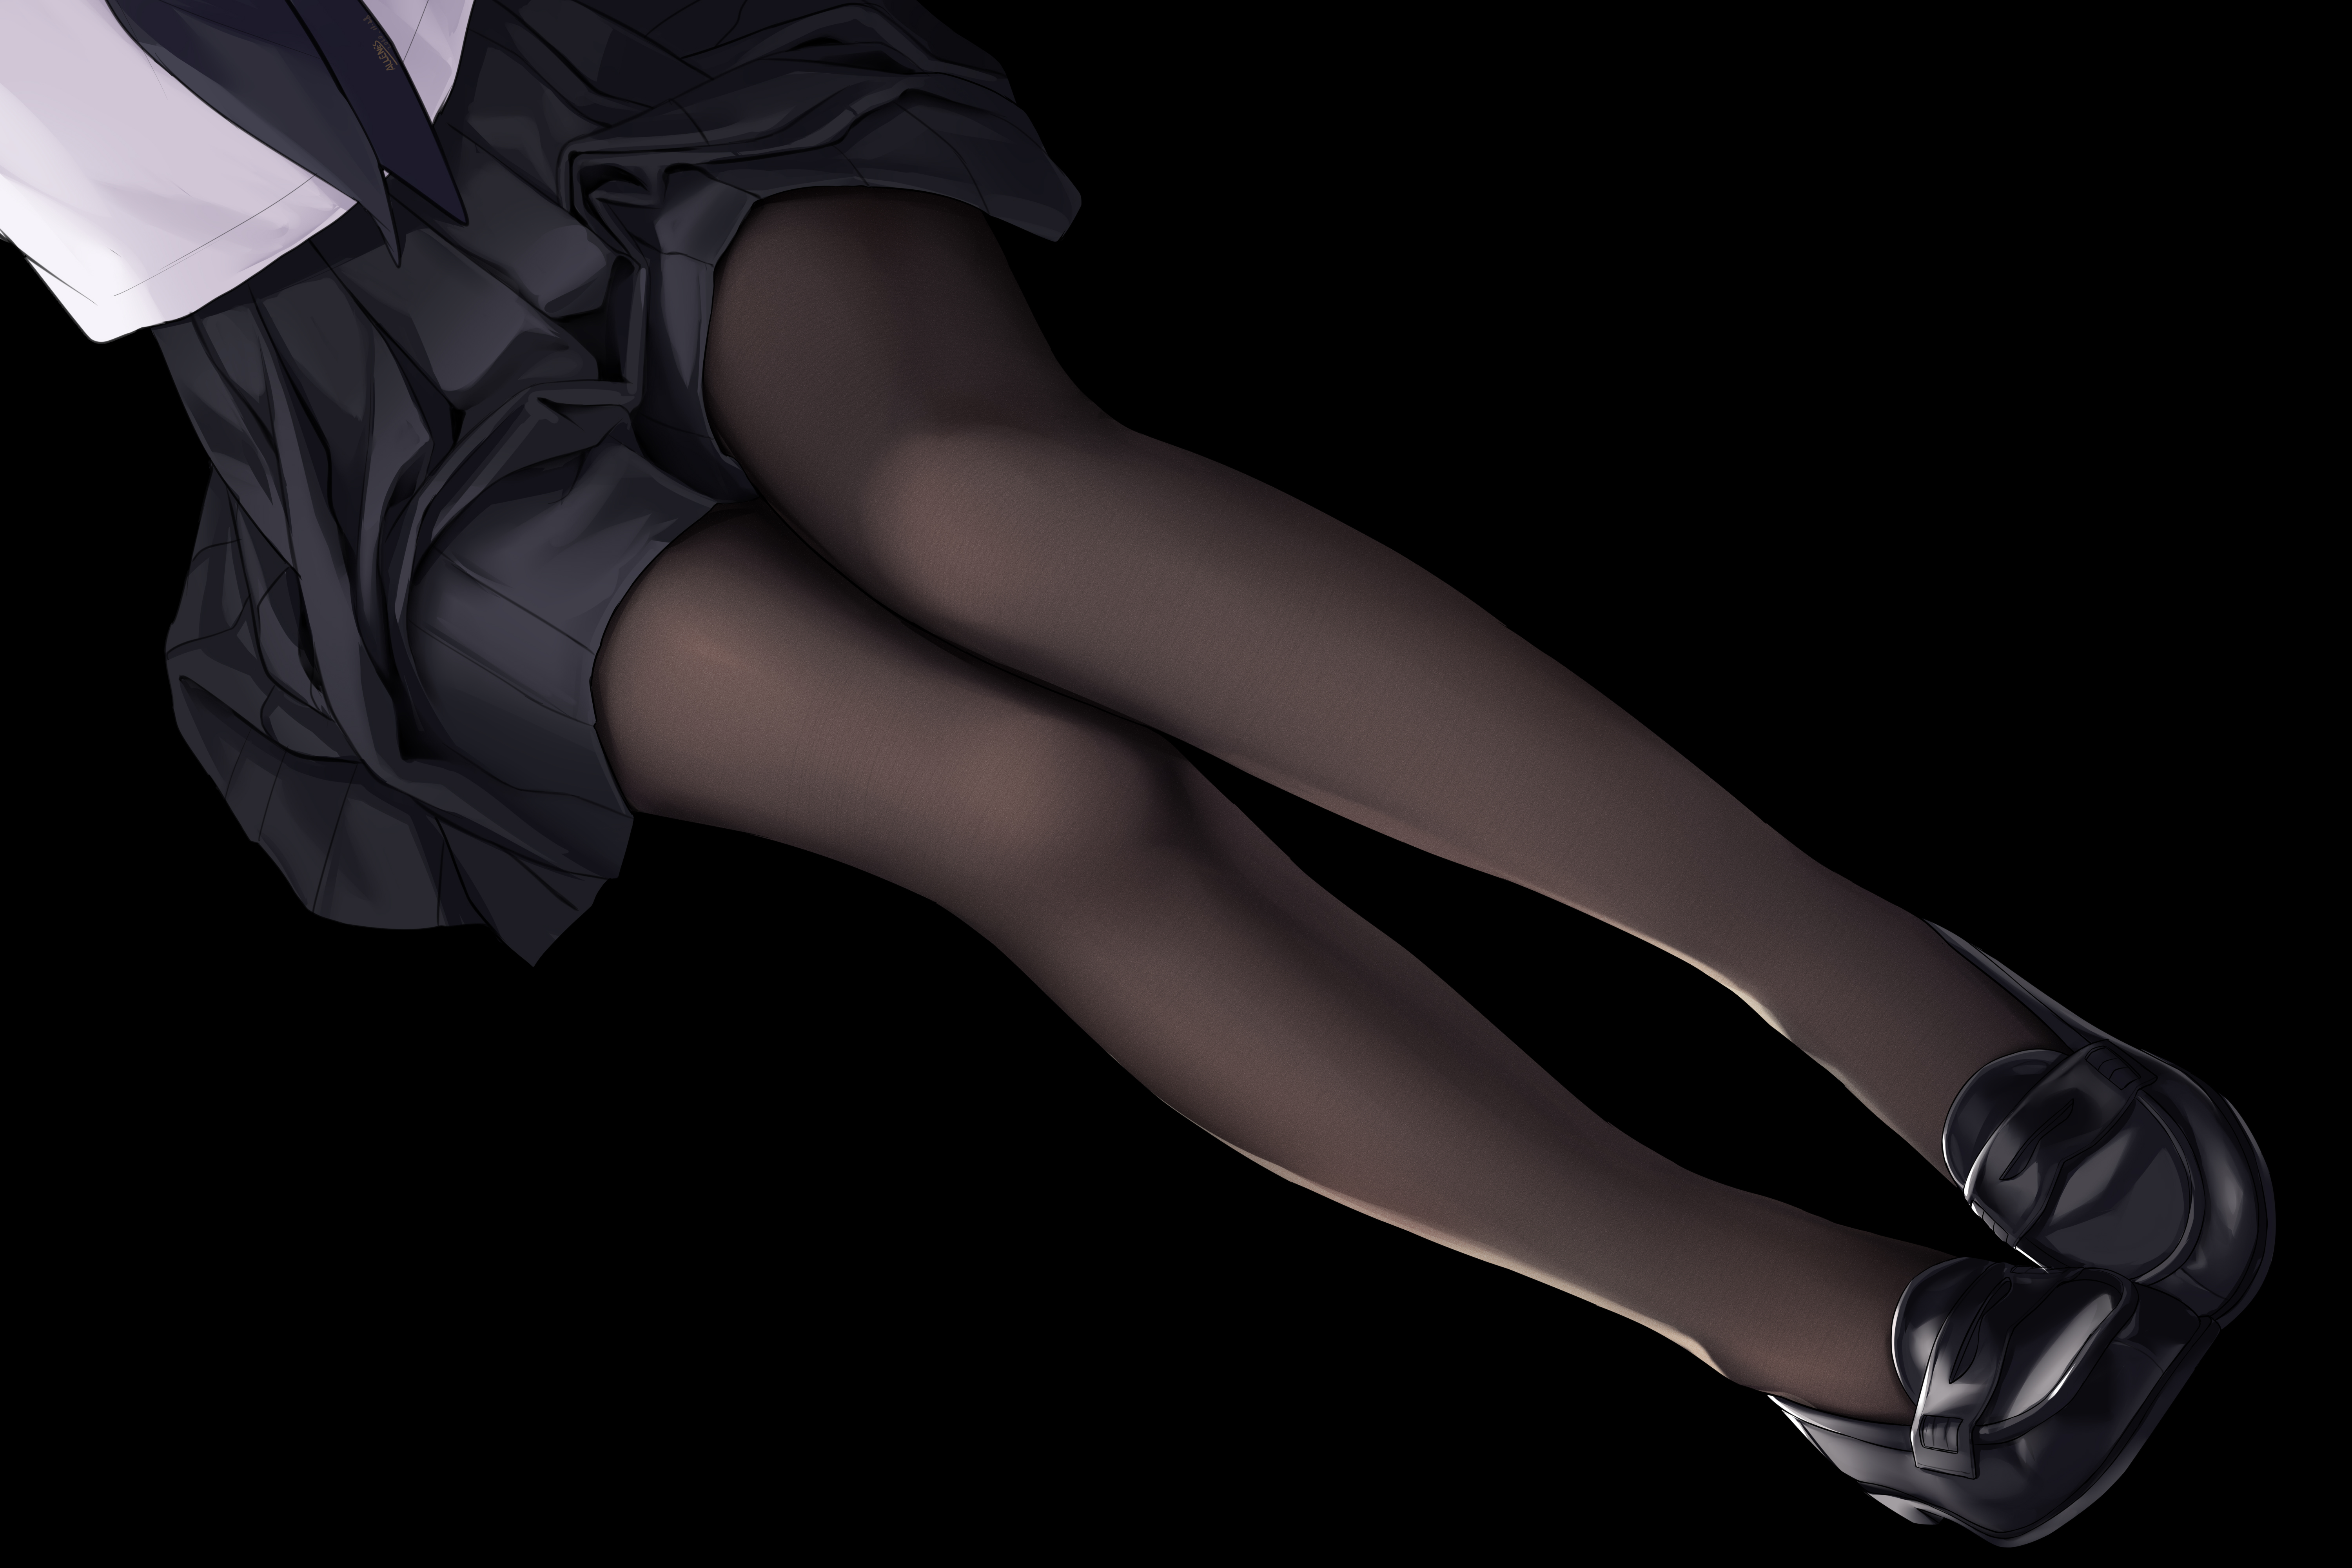 Anime Anime Girls Digital Art Artwork 2D Portrait Legs Simple Background Legs Together Black Backgro 6000x4000